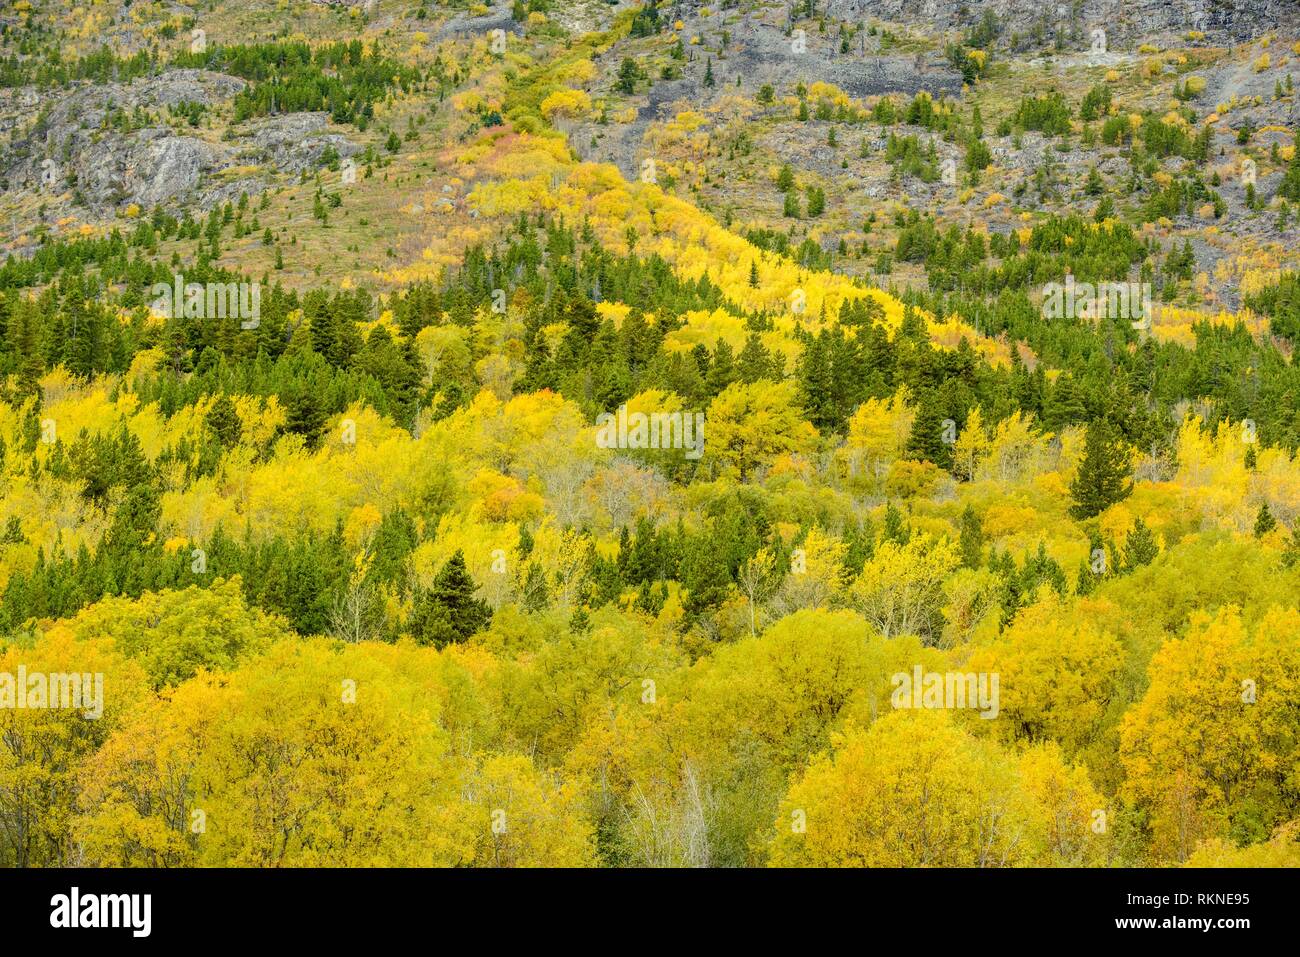 Autumn colour in the boreal forest near Chilko Lake, Chilcotin Wilderness, British Columbia, Canada. Stock Photo